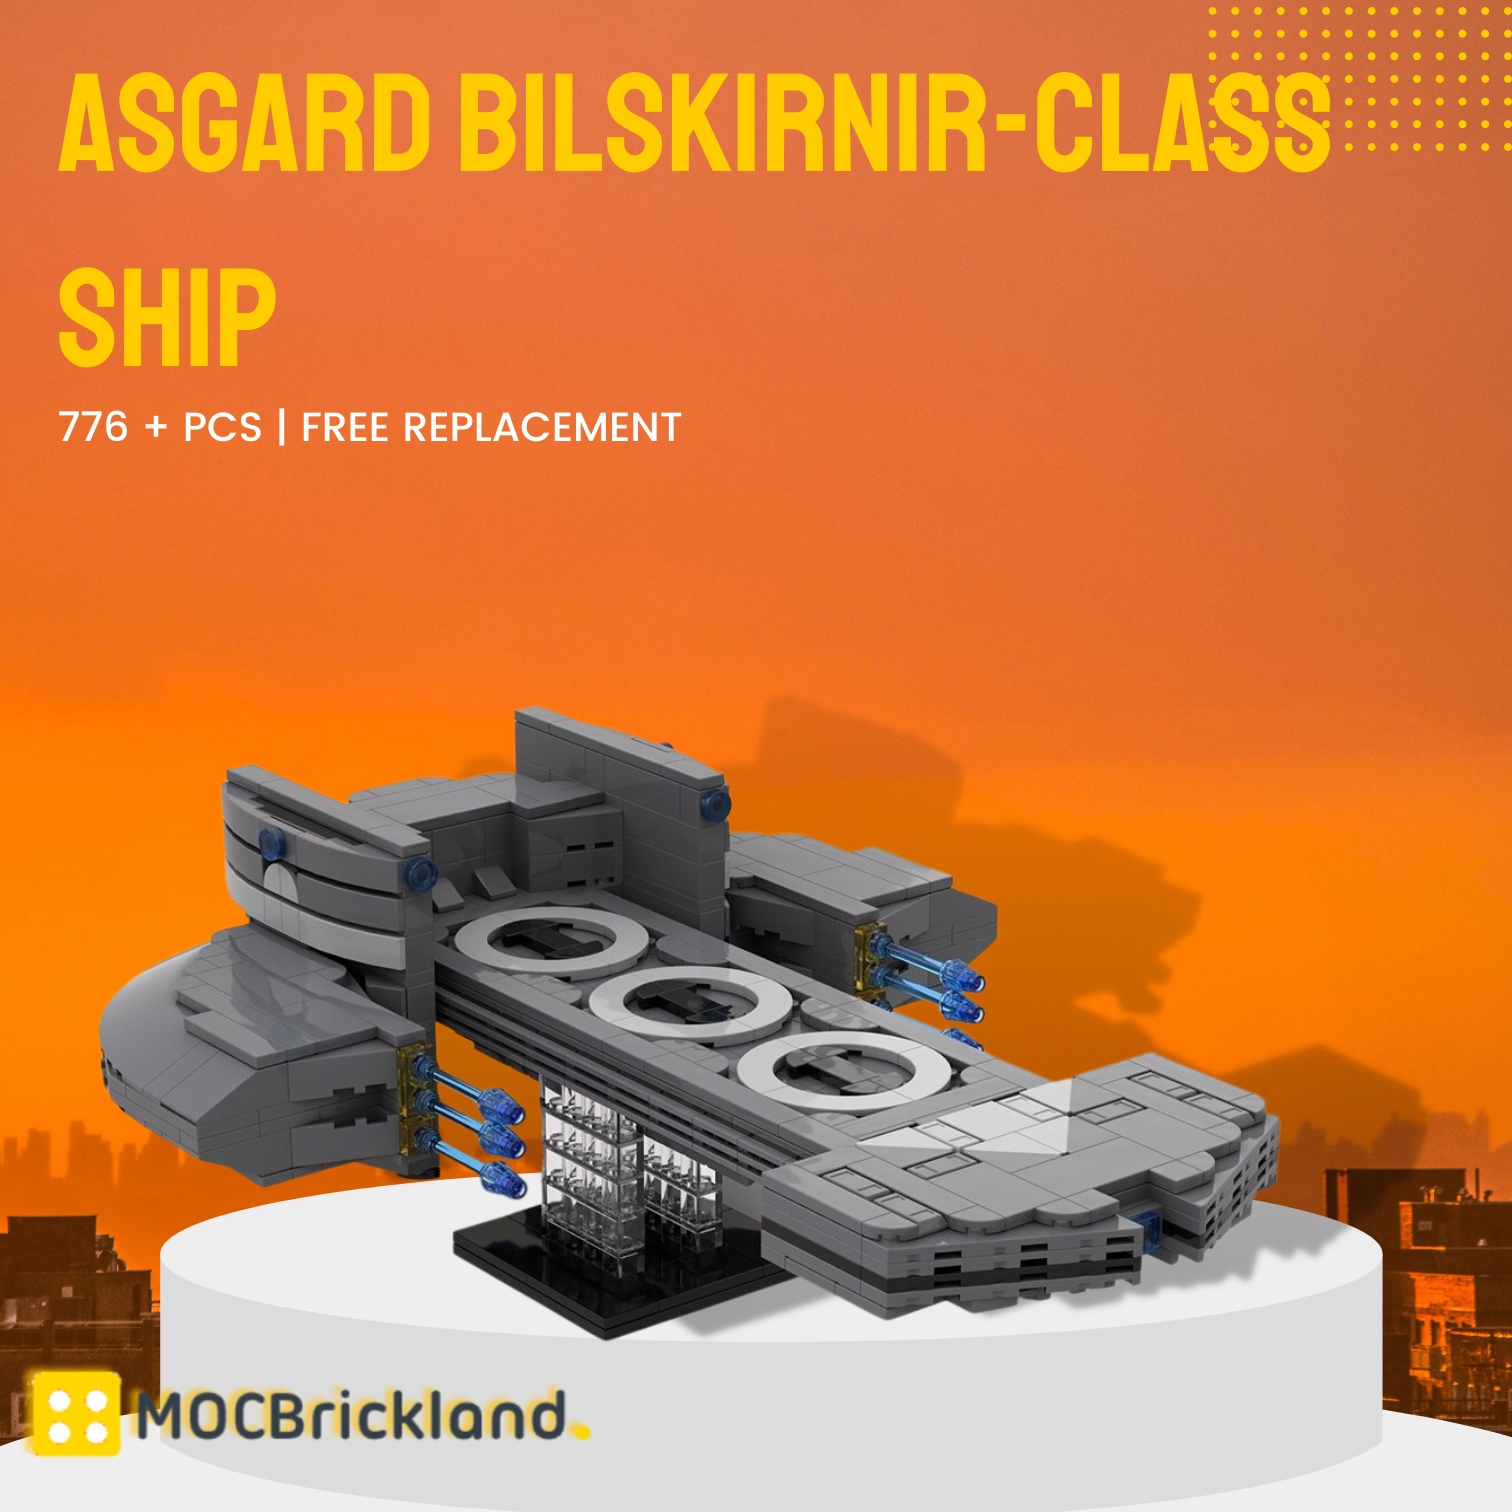 Asgard Bilskirnir-class Ship MOC-125615 Space With 776 Pieces